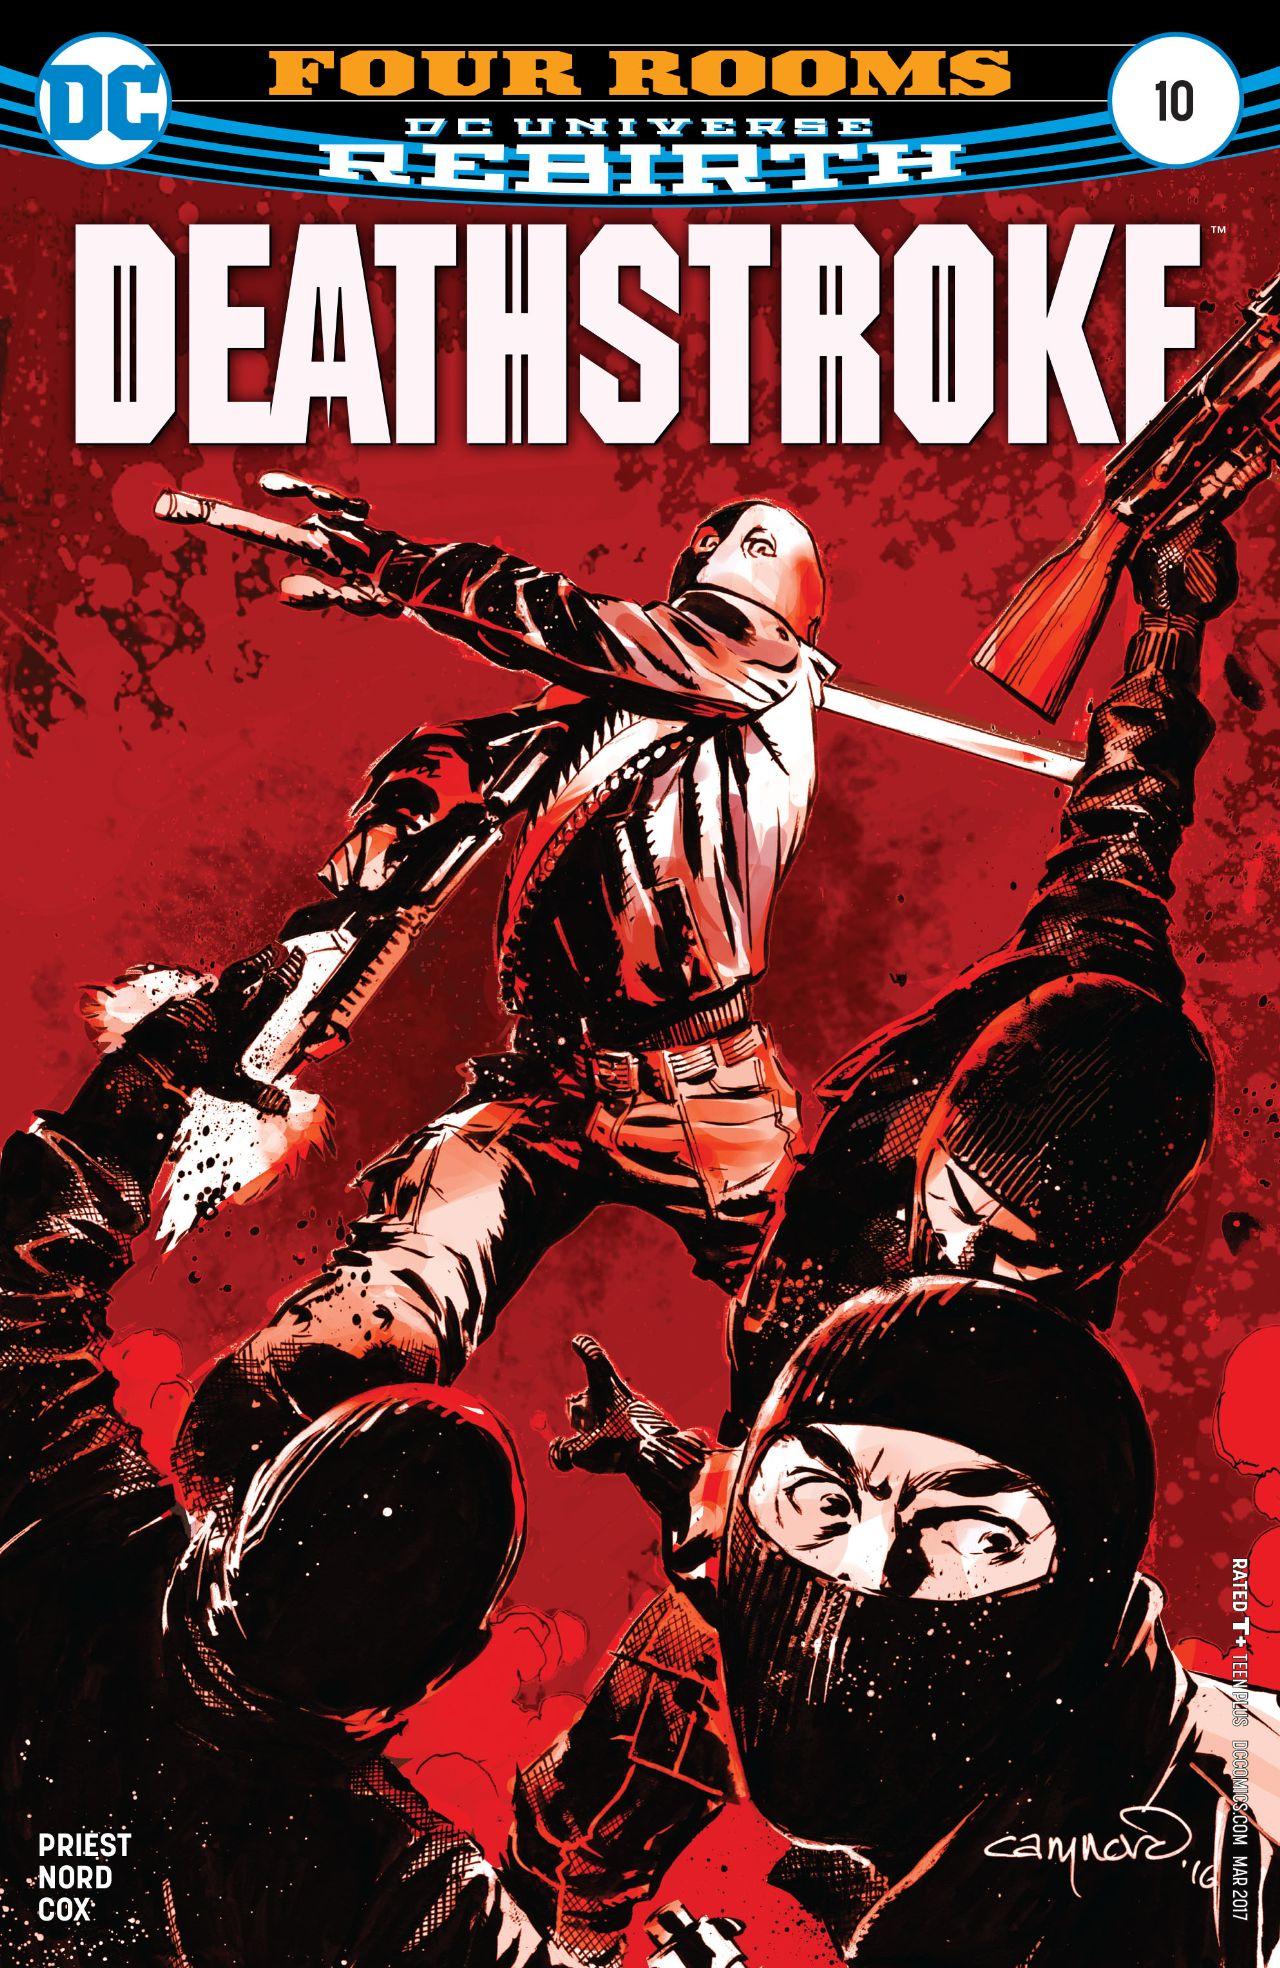 Deathstroke Vol. 4 #10